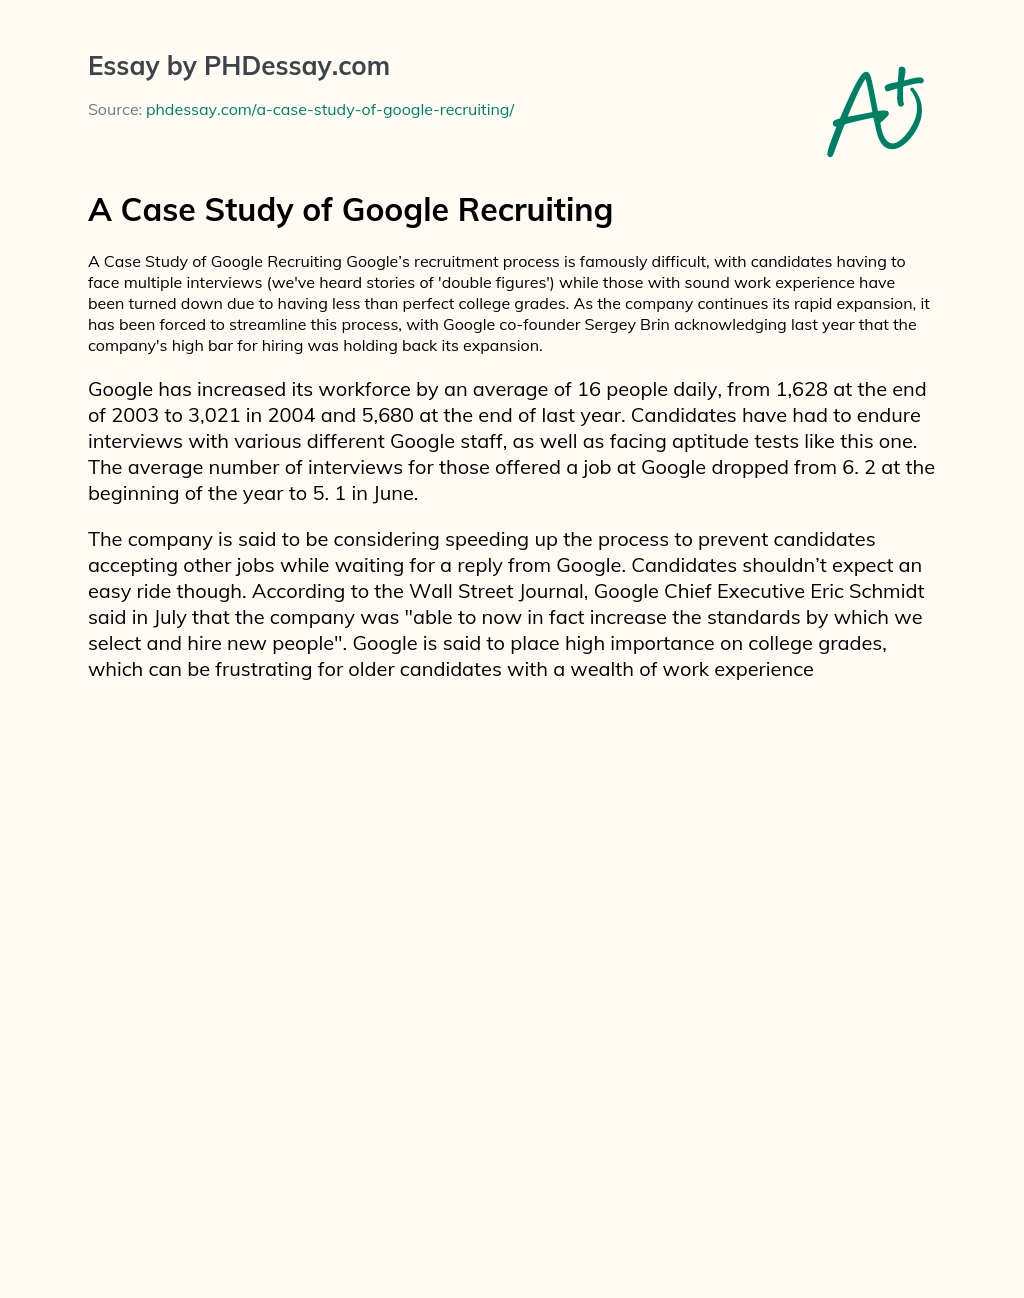 A Case Study of Google Recruiting essay